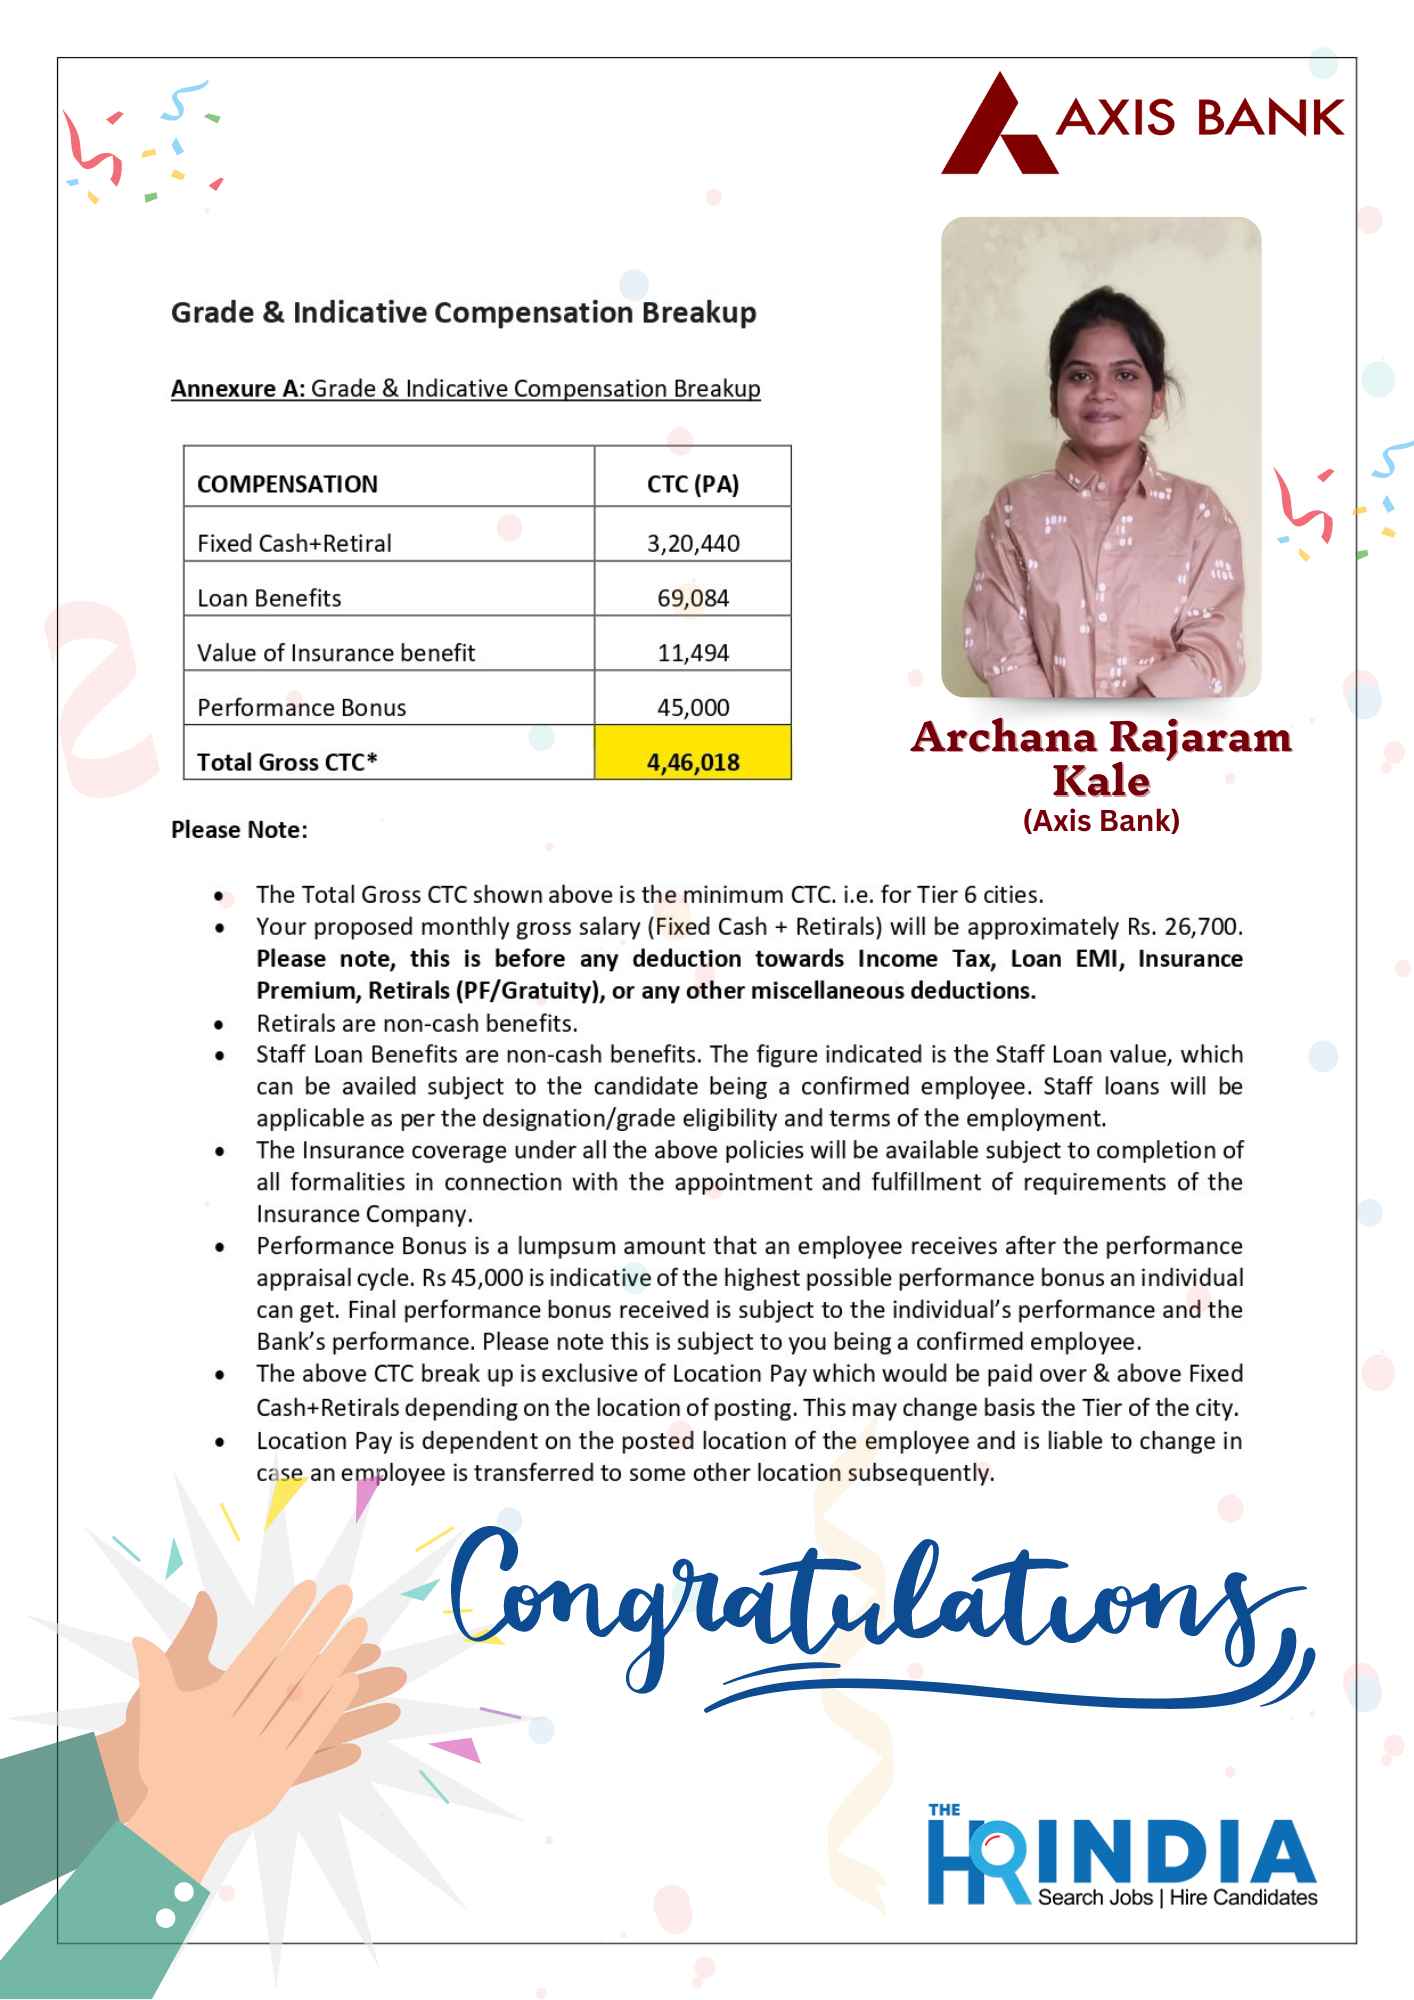 Archana Rajaram Kale (1)  | The HR India